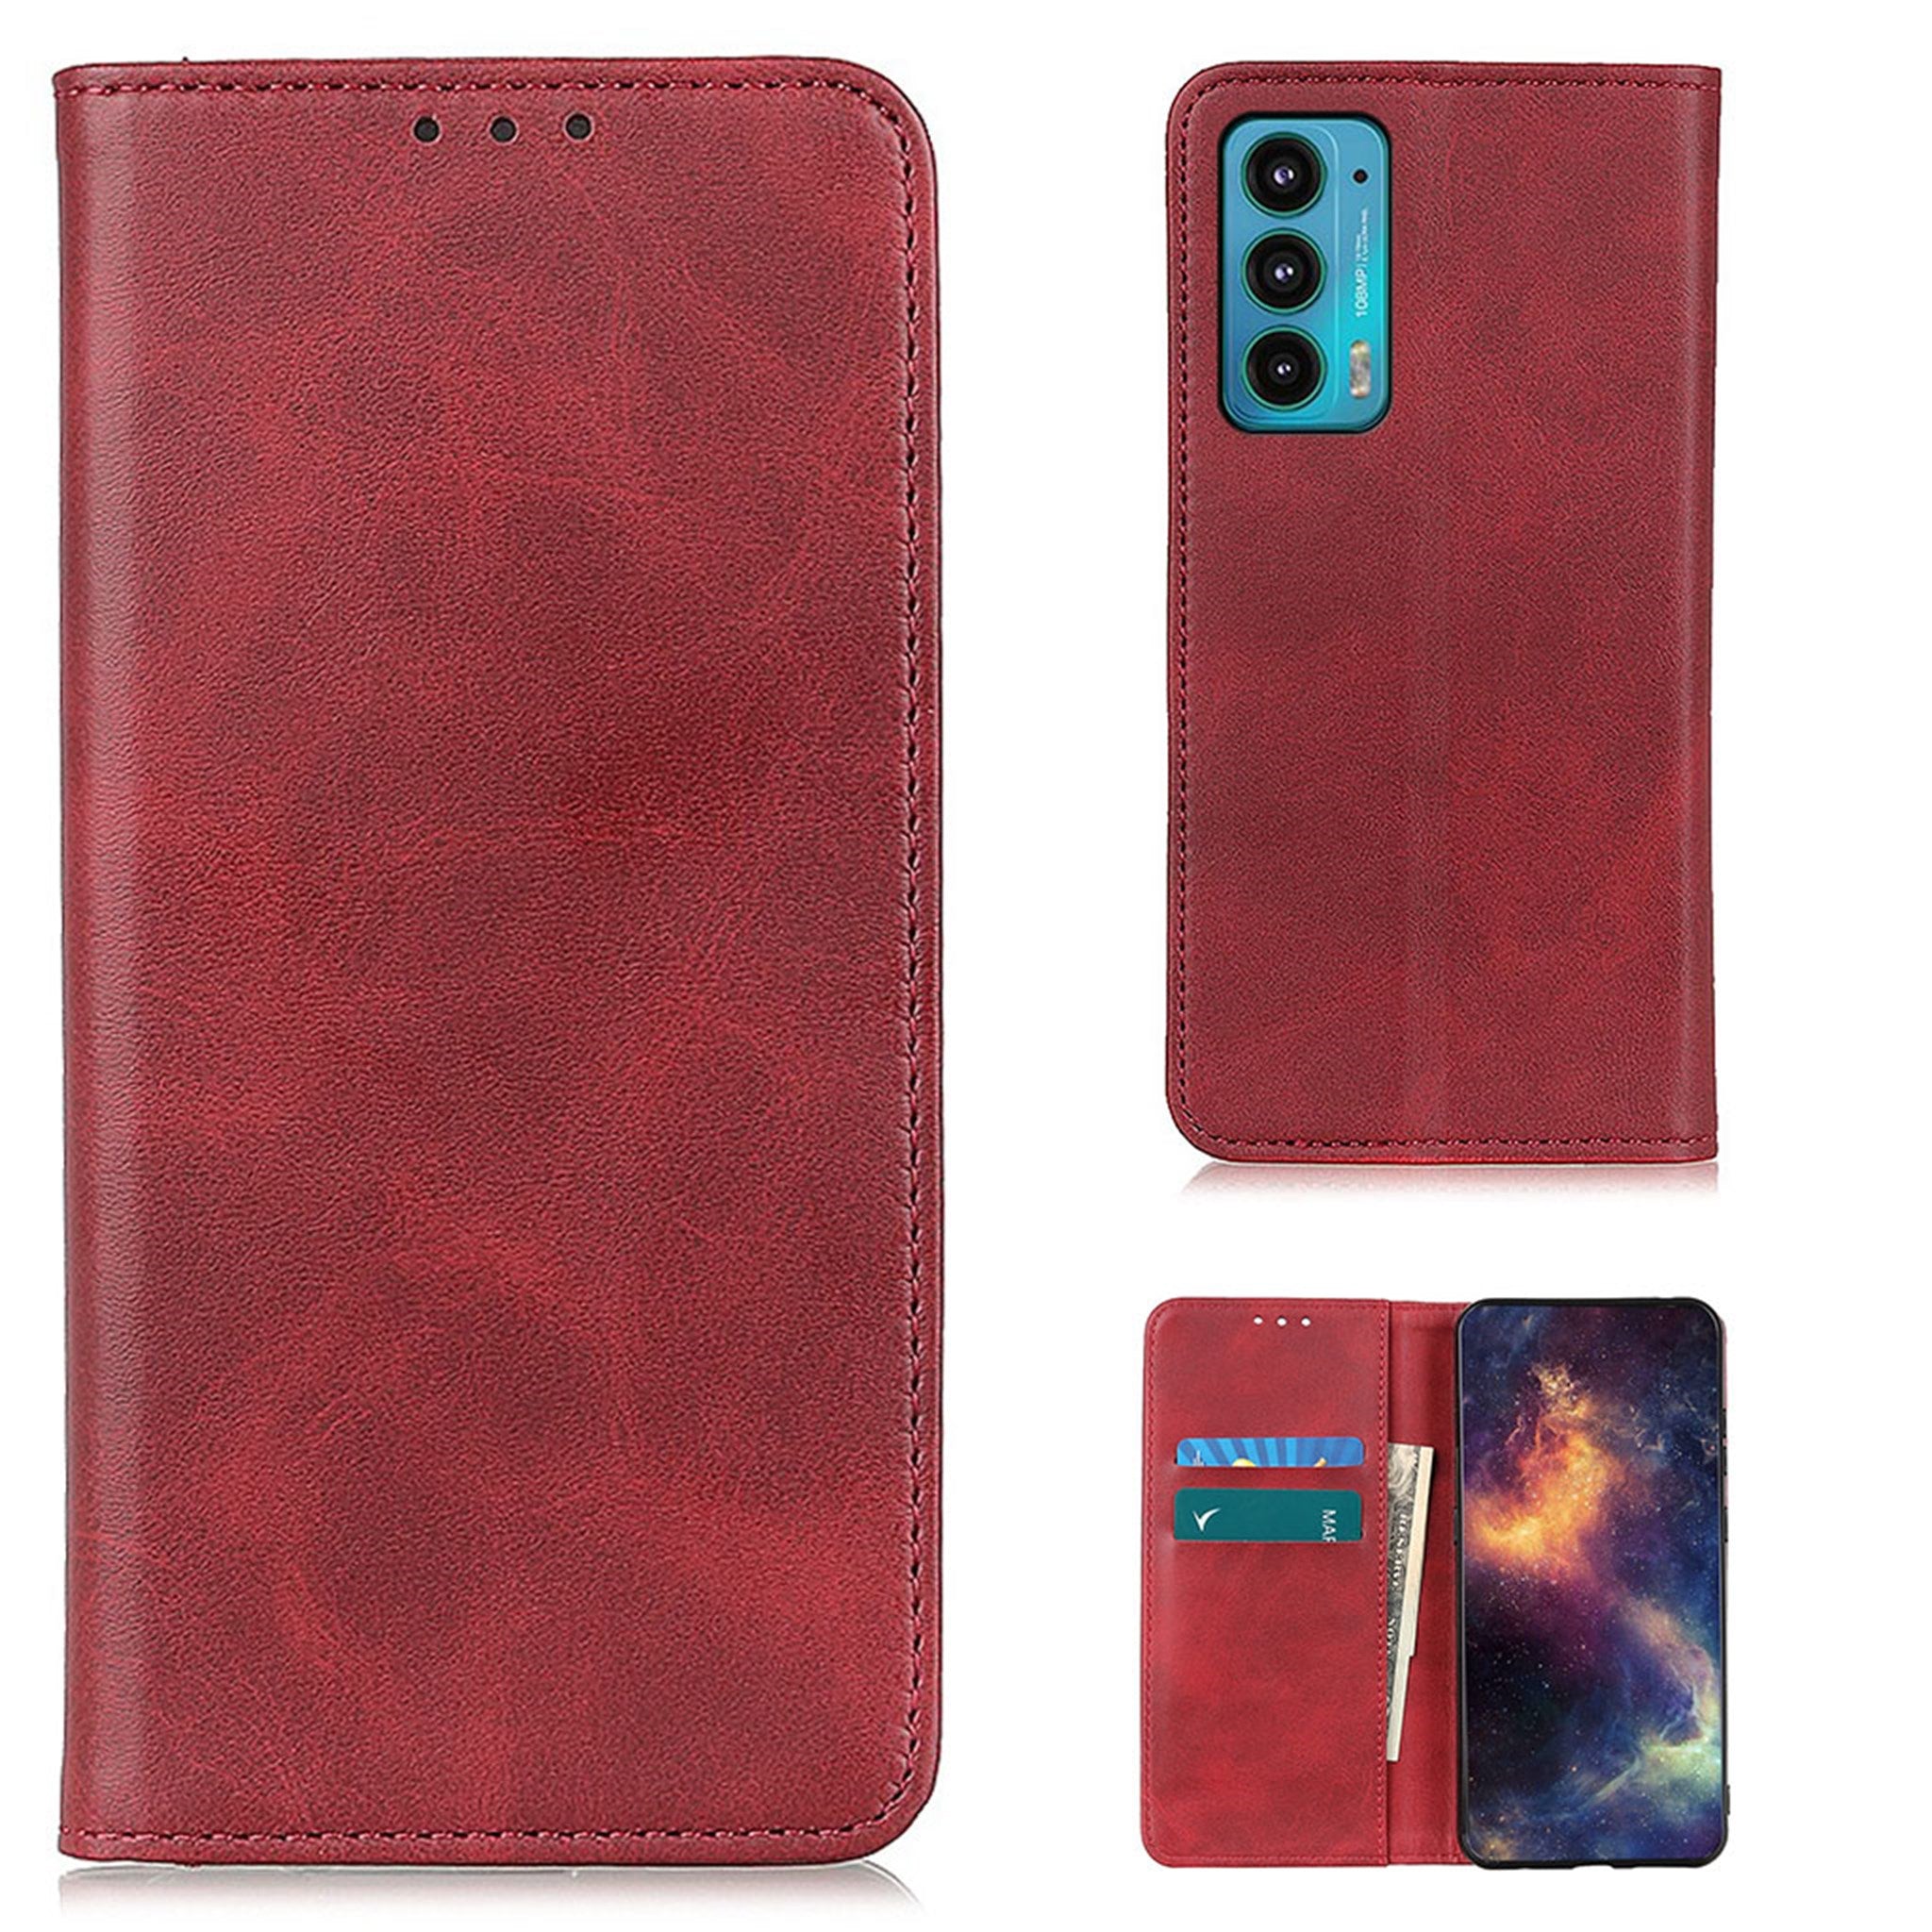 Wallet-style genuine leather flipcase for Motorola Edge 20 - Red